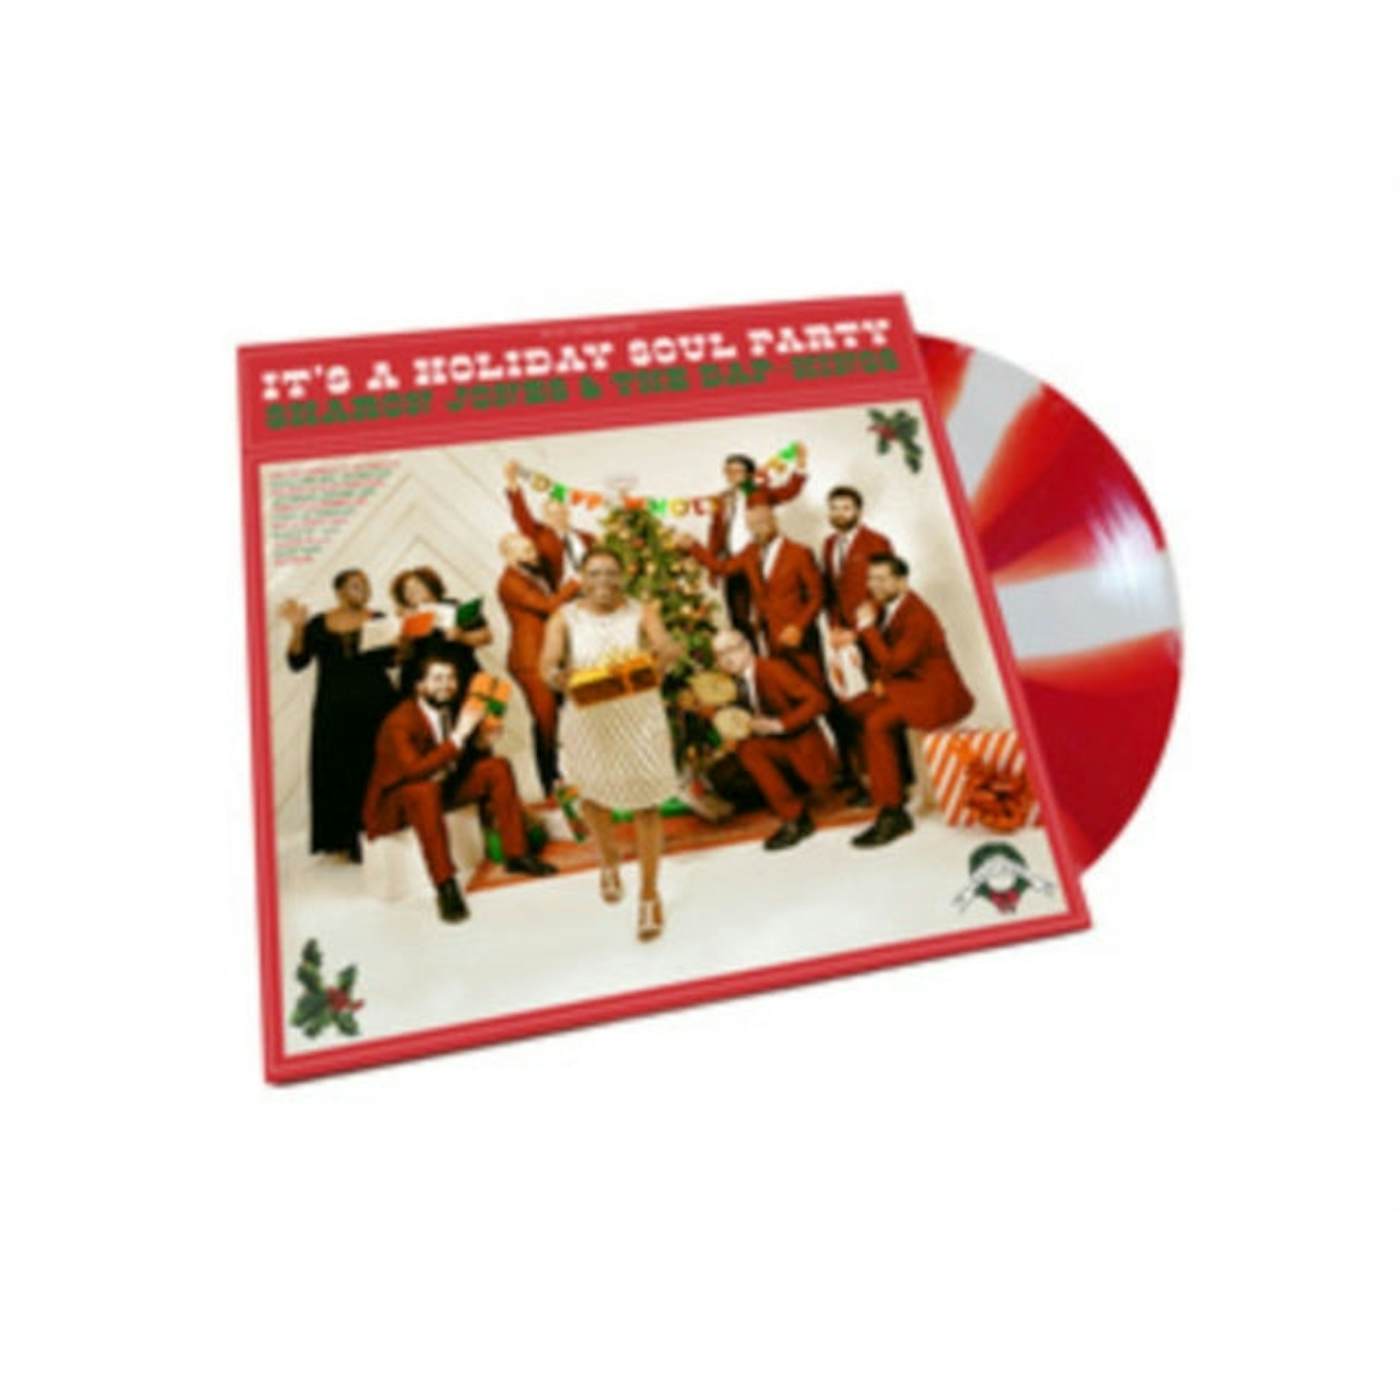 Sharon Jones & The Dap-Kings LP Vinyl Record - Its A Holiday Soul Party